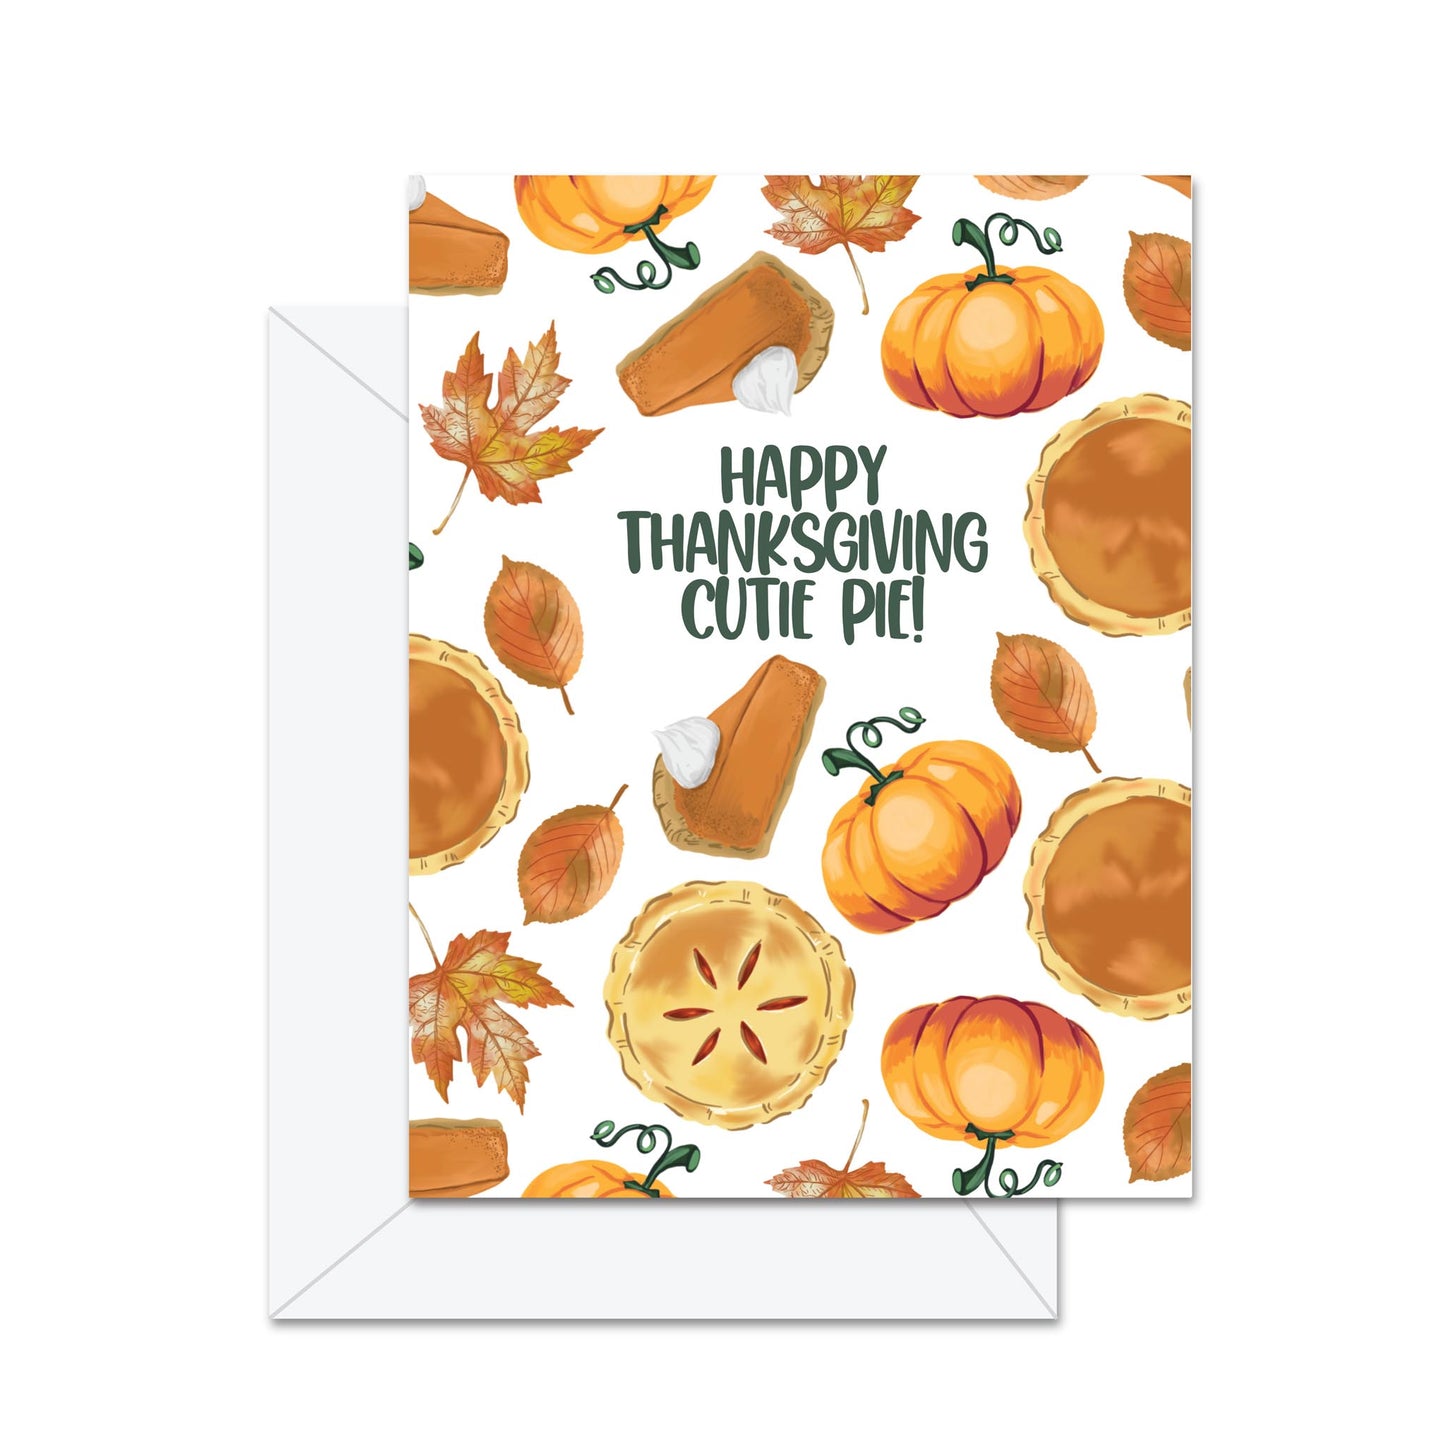 Happy Thanksgiving Cutie Pie - Greeting Card